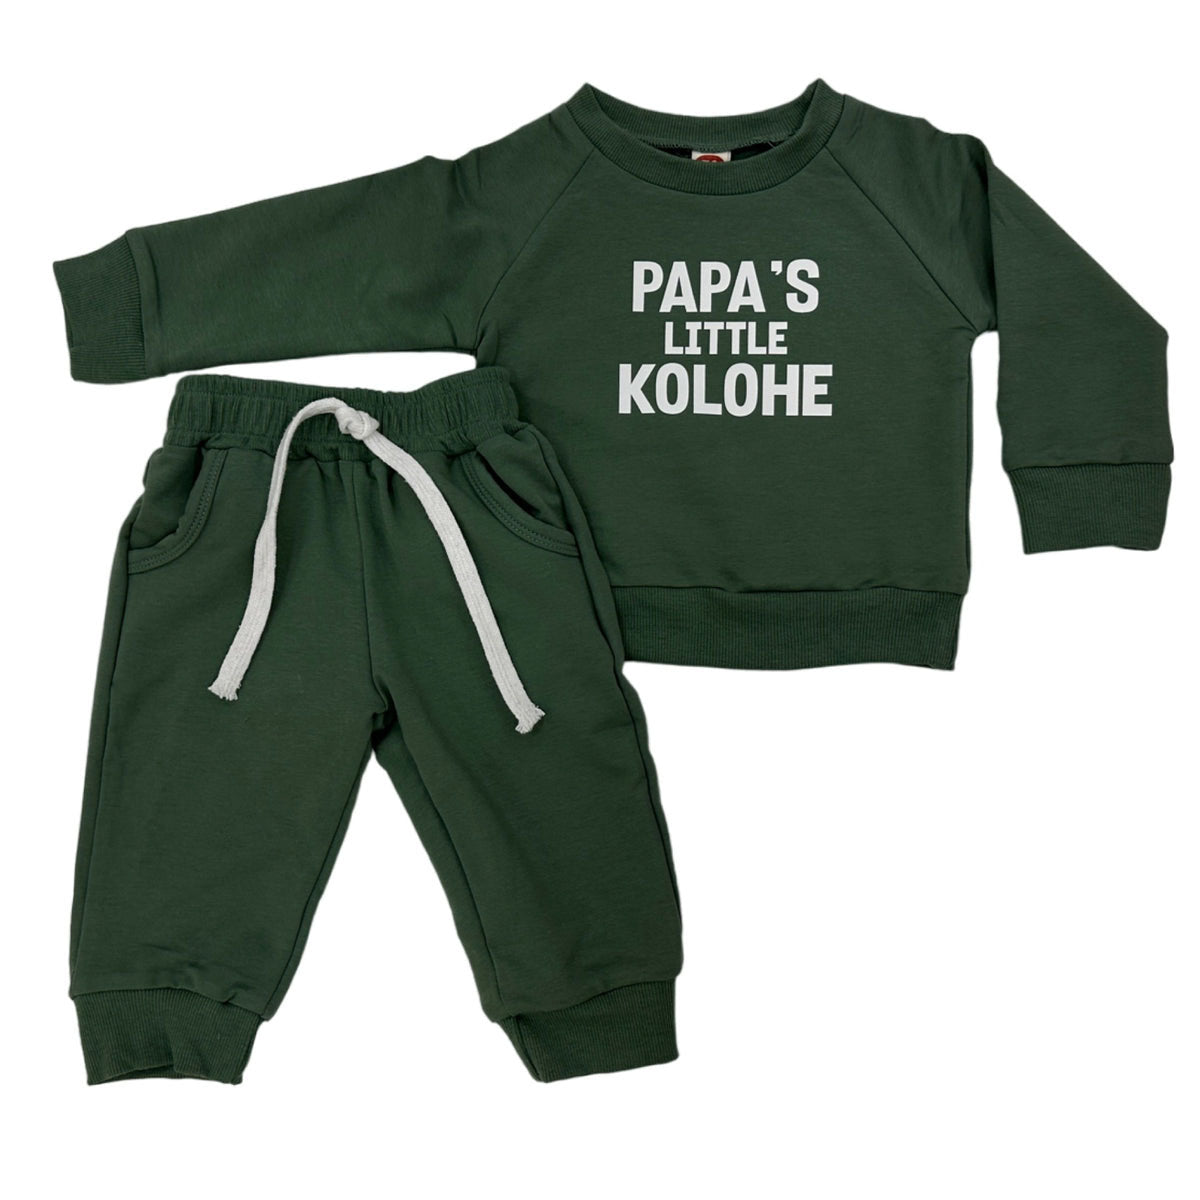 Papa's little kolohe Green Long sleeve set - Sweet Sweet Honey Hawaii